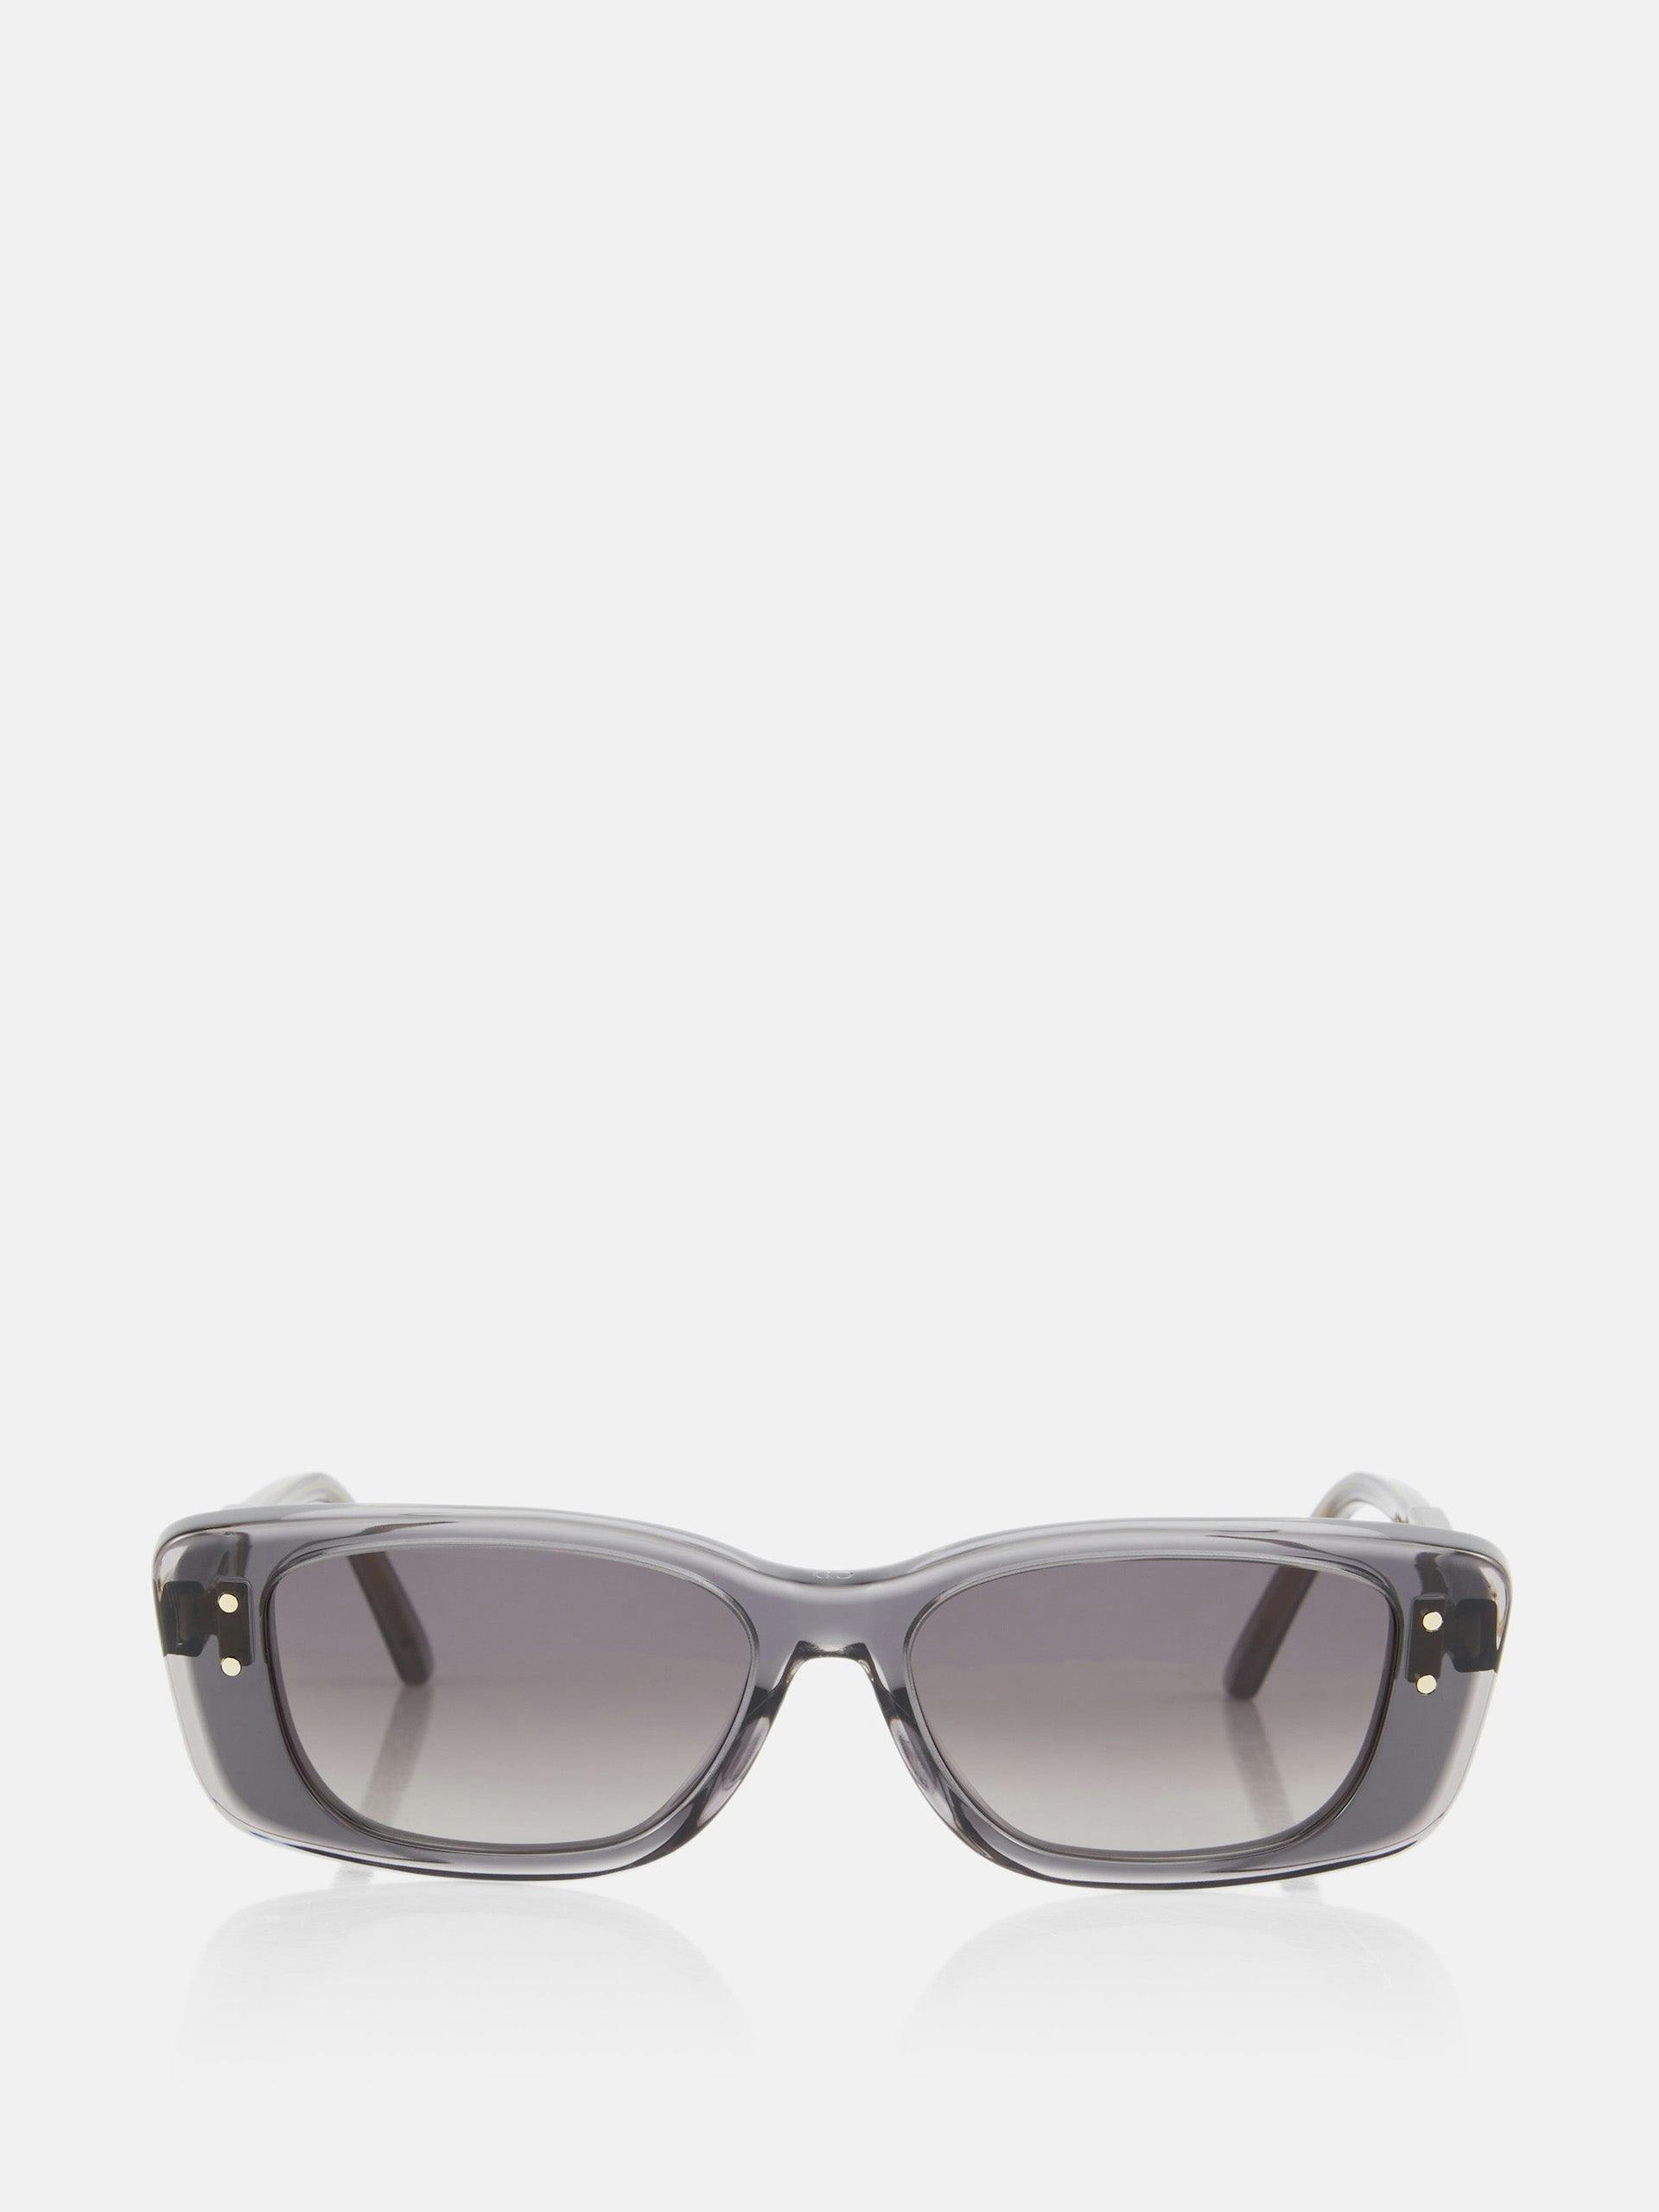 DiorHighlight S21 sunglasses